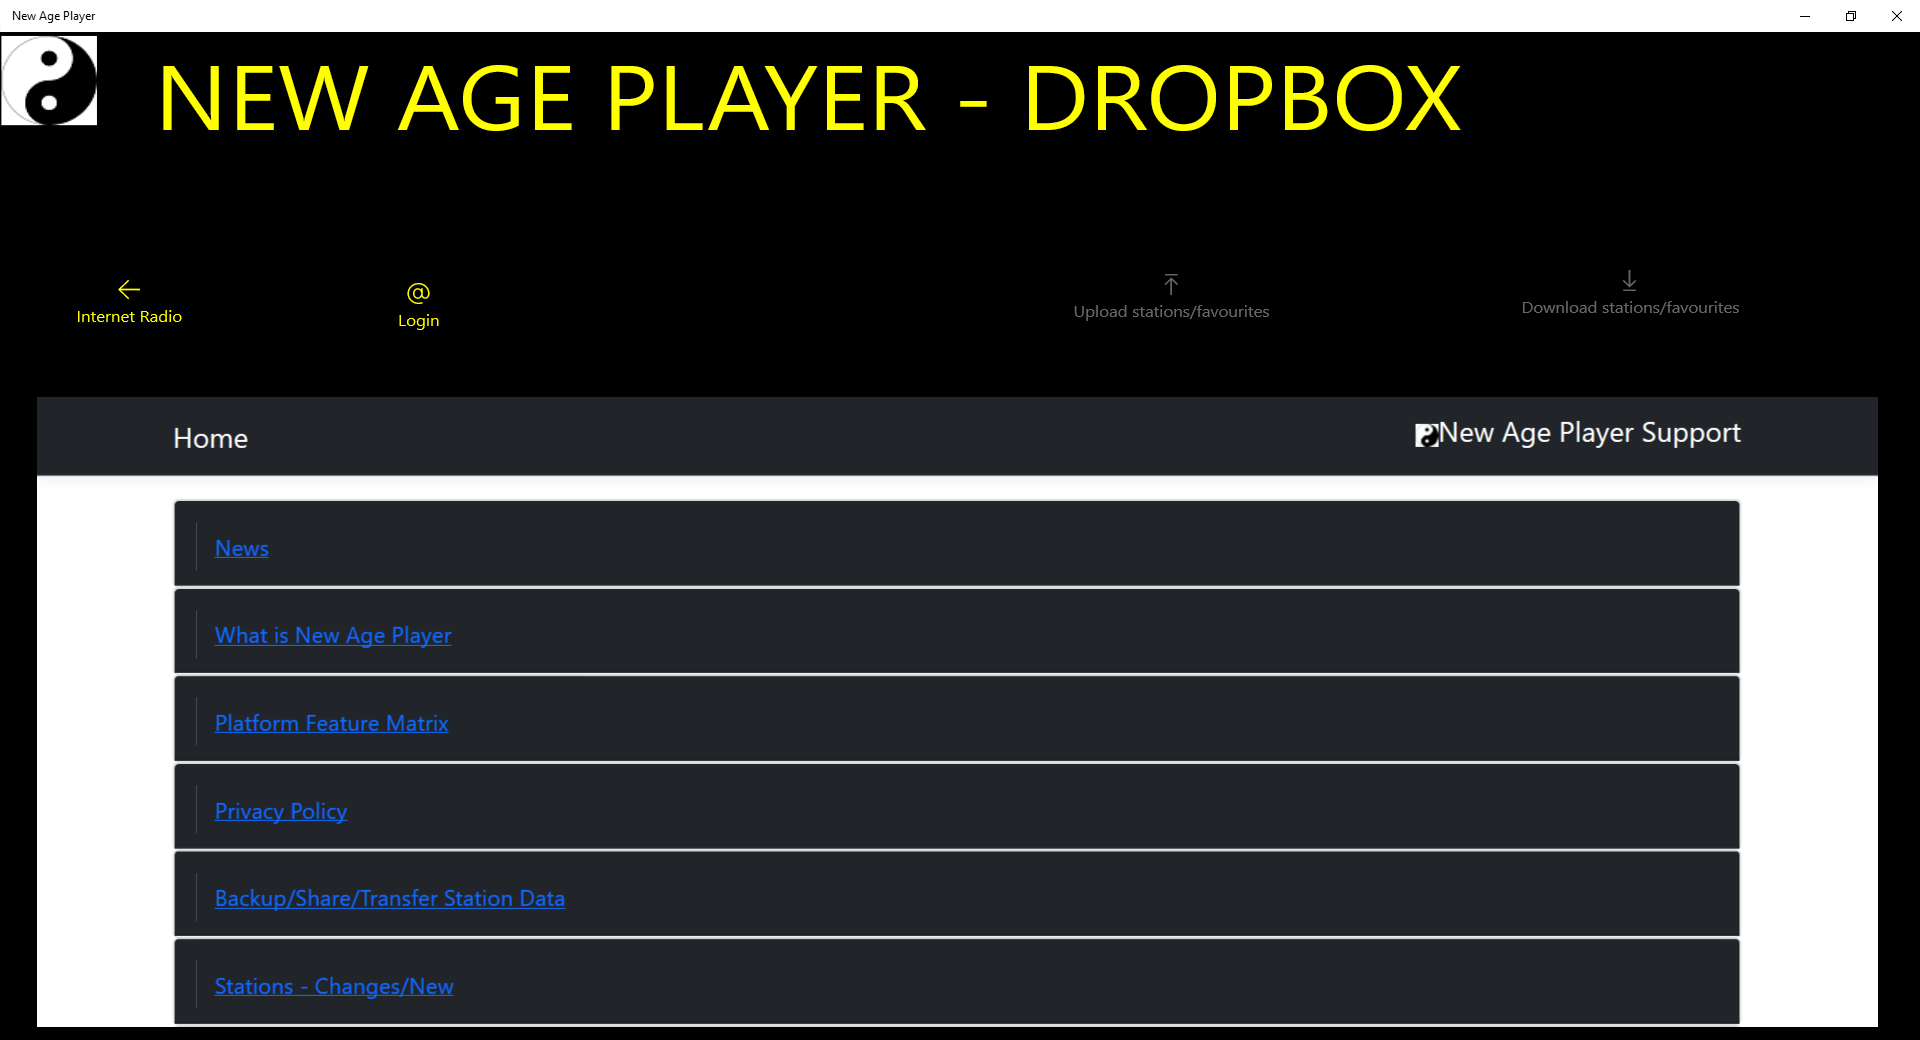 Dropbox screen